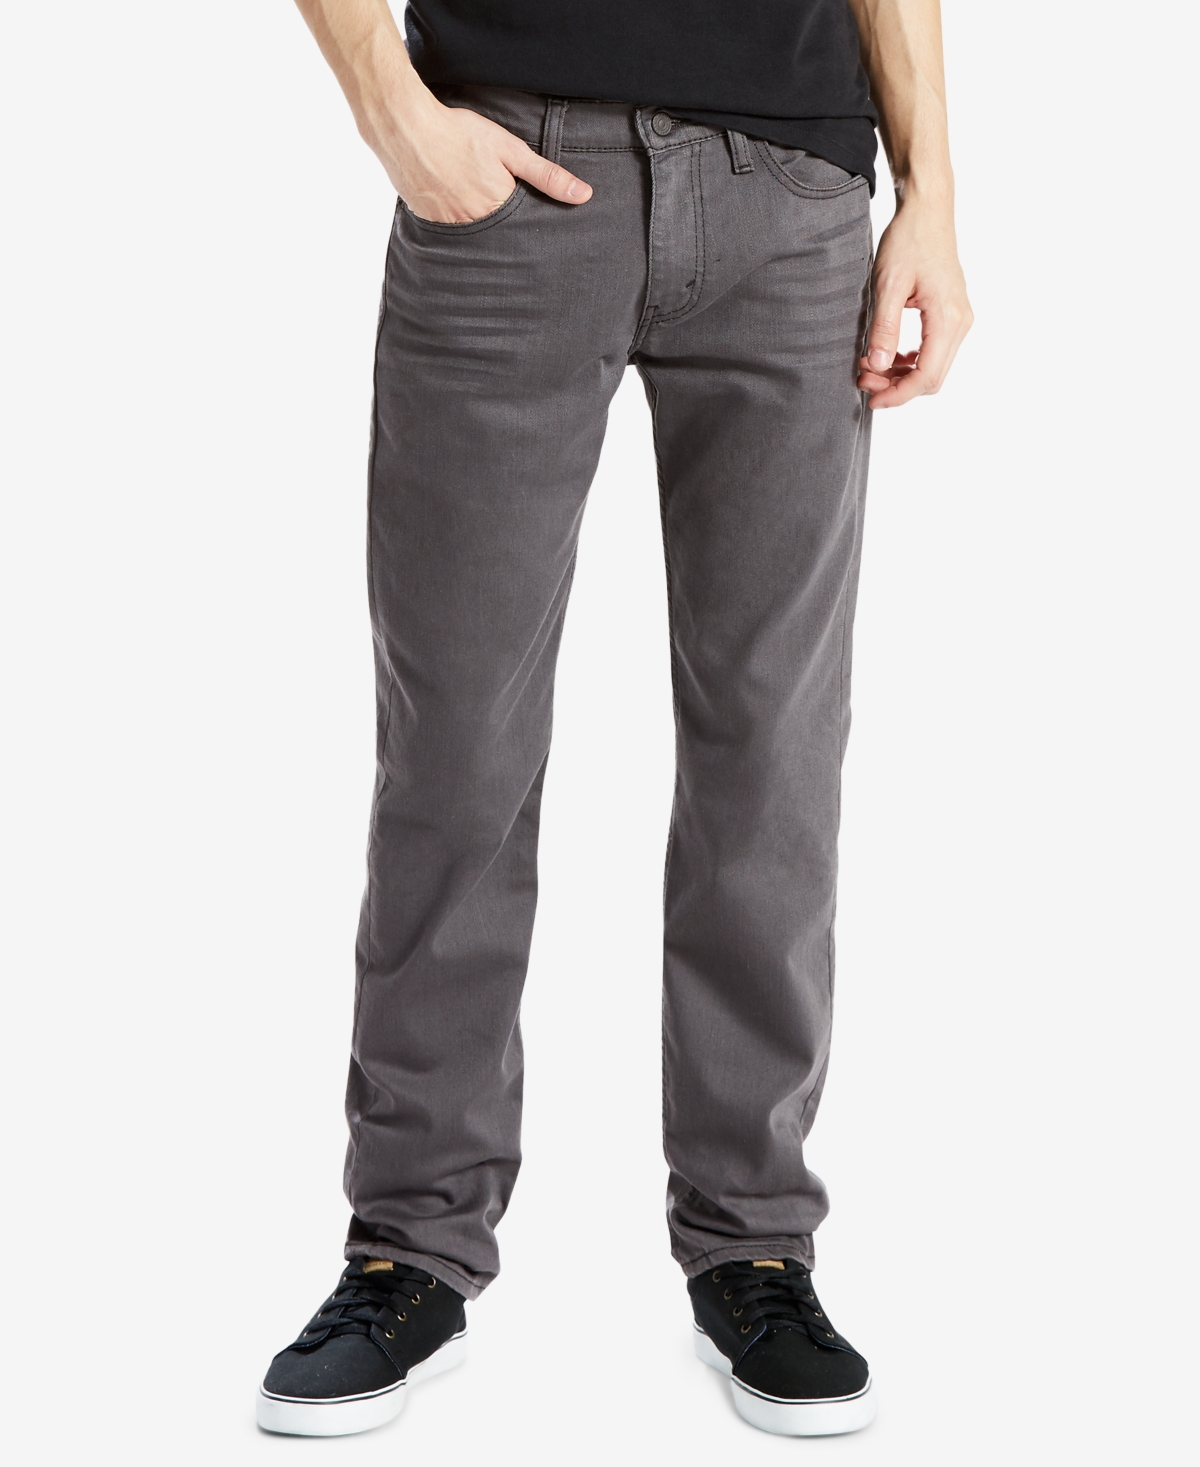 UPC 190416414291 product image for Levi's Men's 511 Slim Fit Jeans | upcitemdb.com